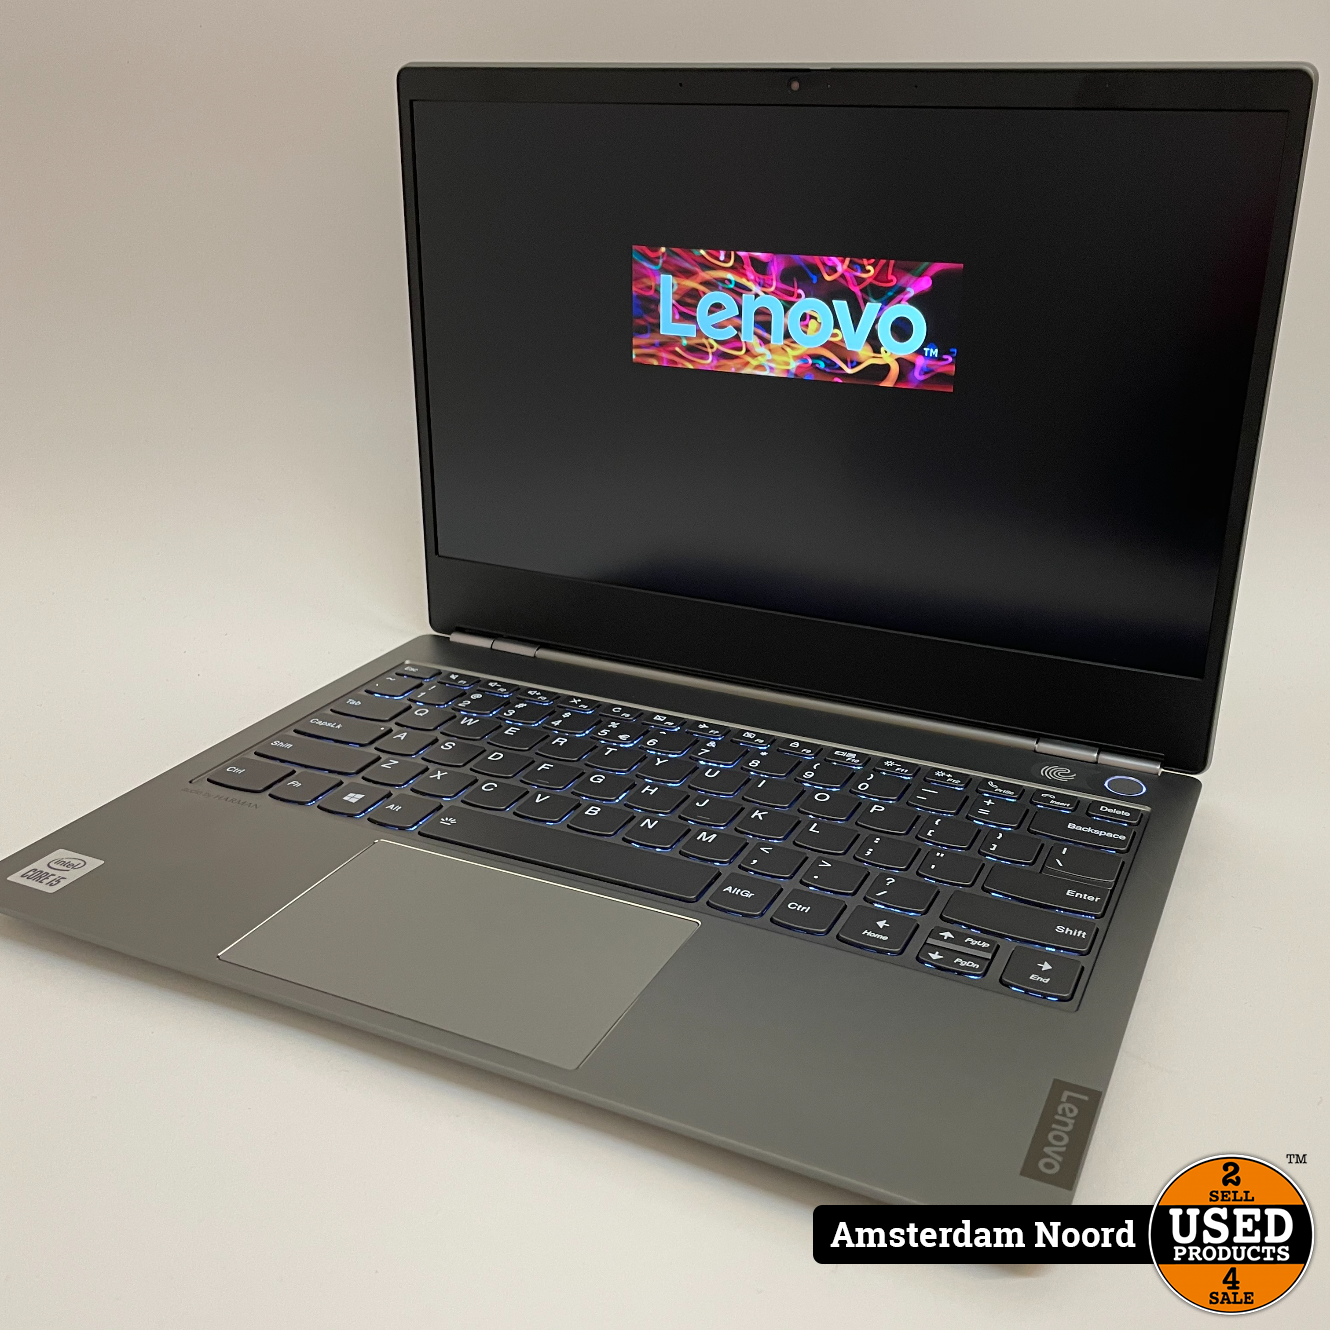 Lenovo ThinkBook 13s IML (20RR004QMH) 13FHD/i5-10210U/16GB/512SSD/W10  Used Products Amsterdam Noord